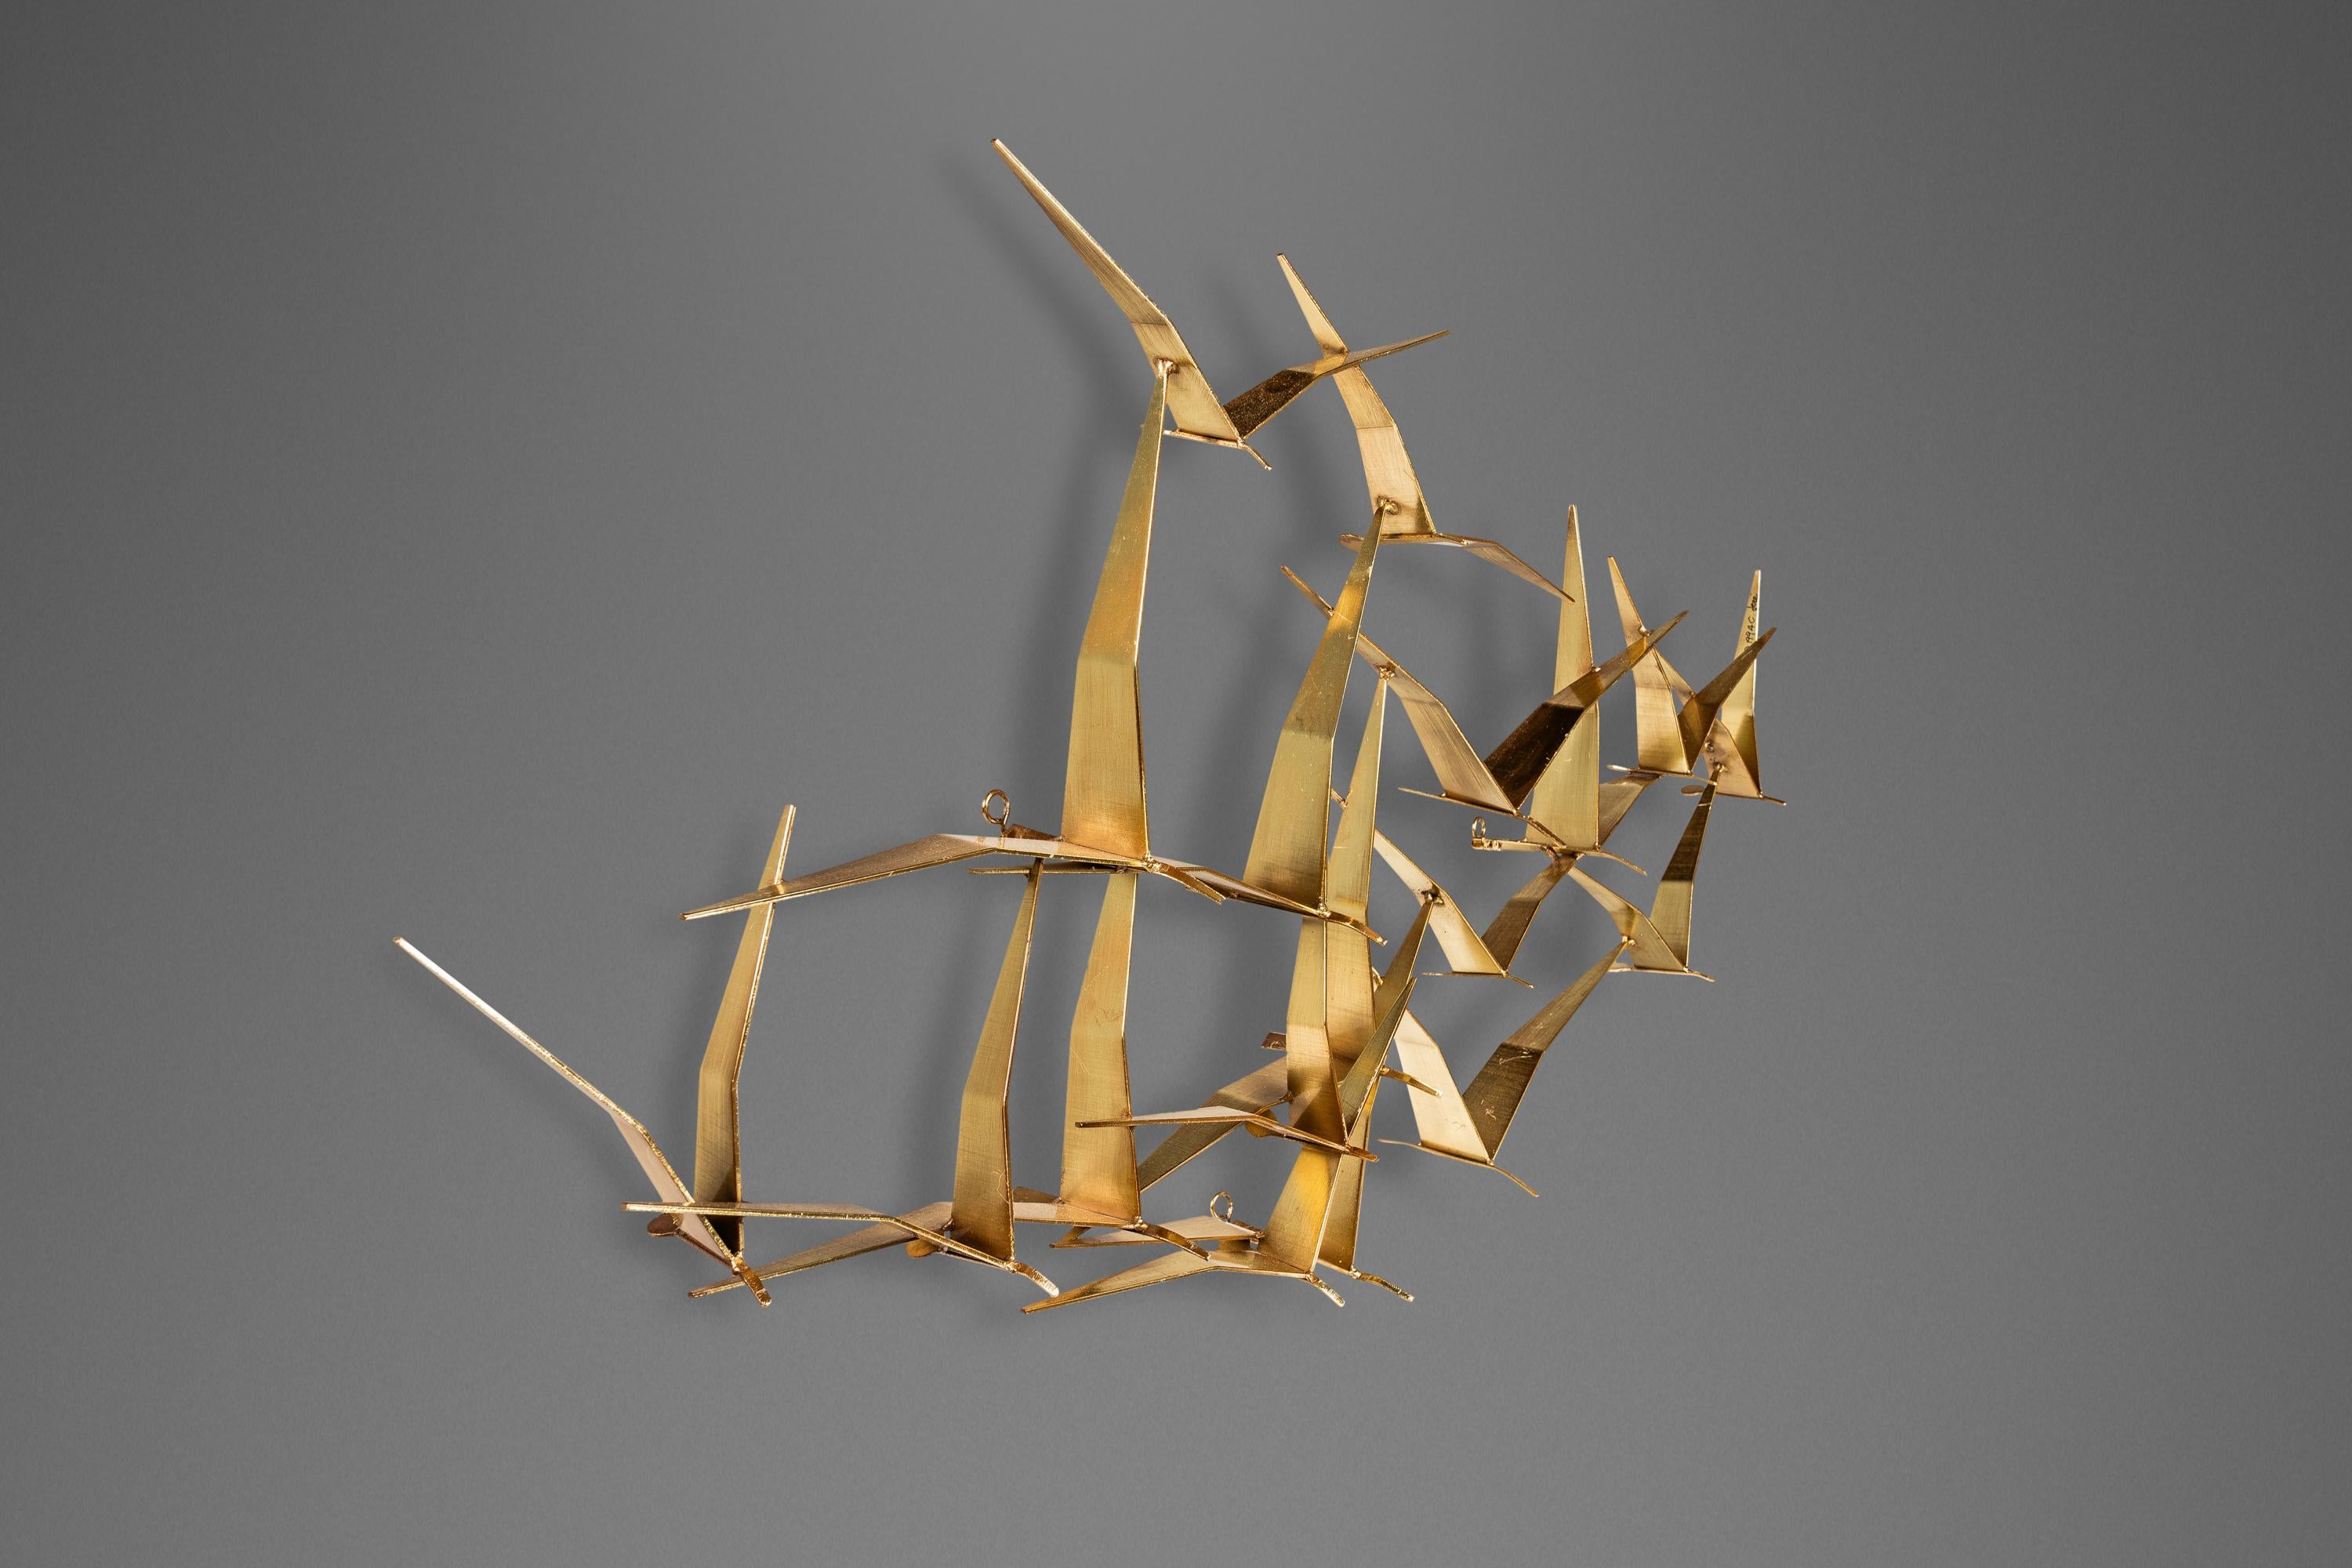 Modern C. Jere Brass Sculpture Birds in Flight by Curtis Freiler & Jerry Fels, c. 1994 For Sale